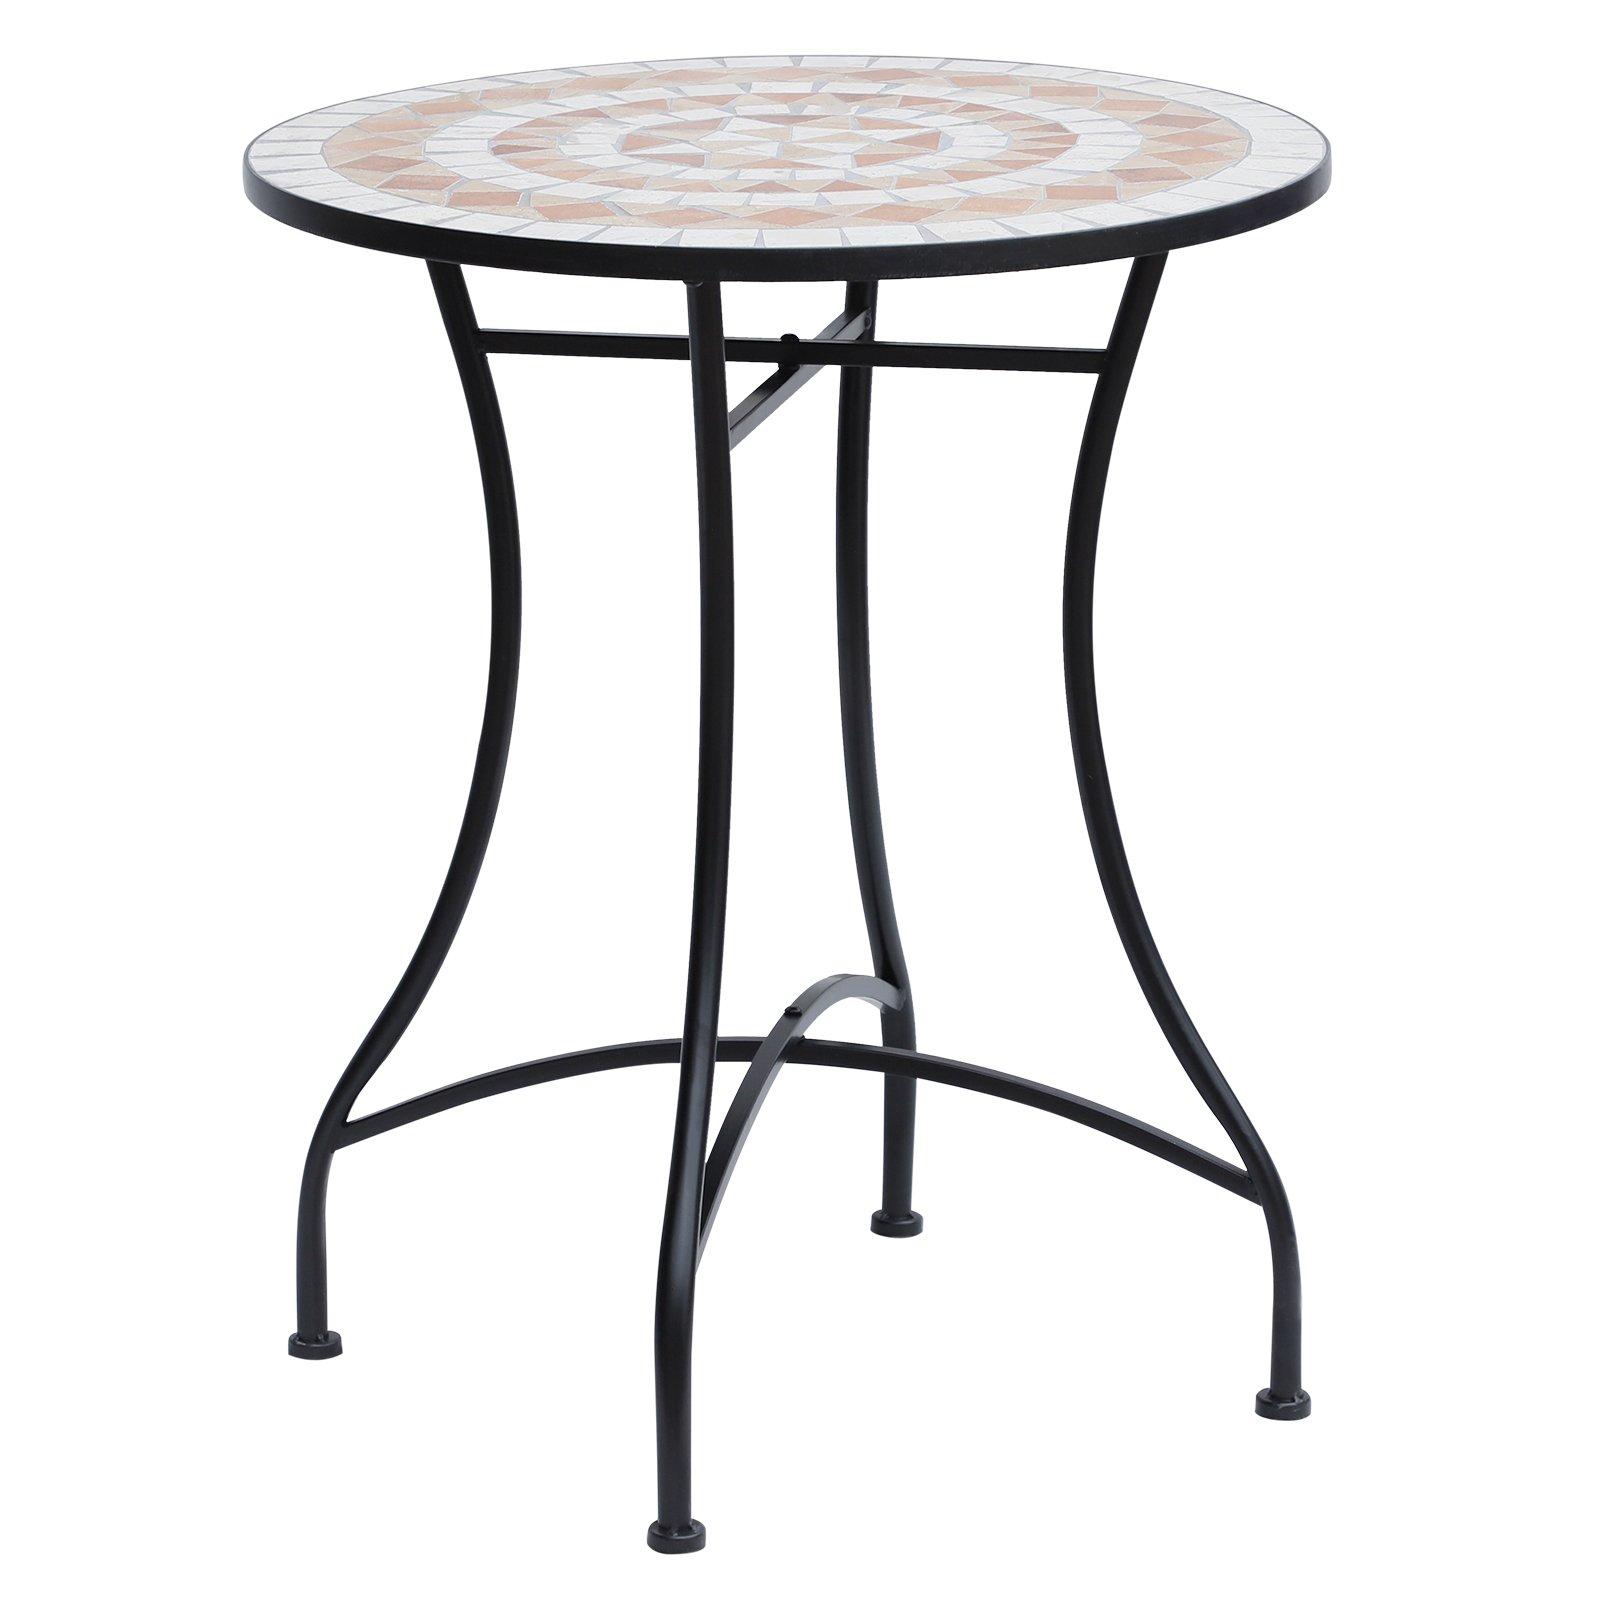 Mosaic Table Round Ceramic Bistro Garden Furniture Side Bar Table